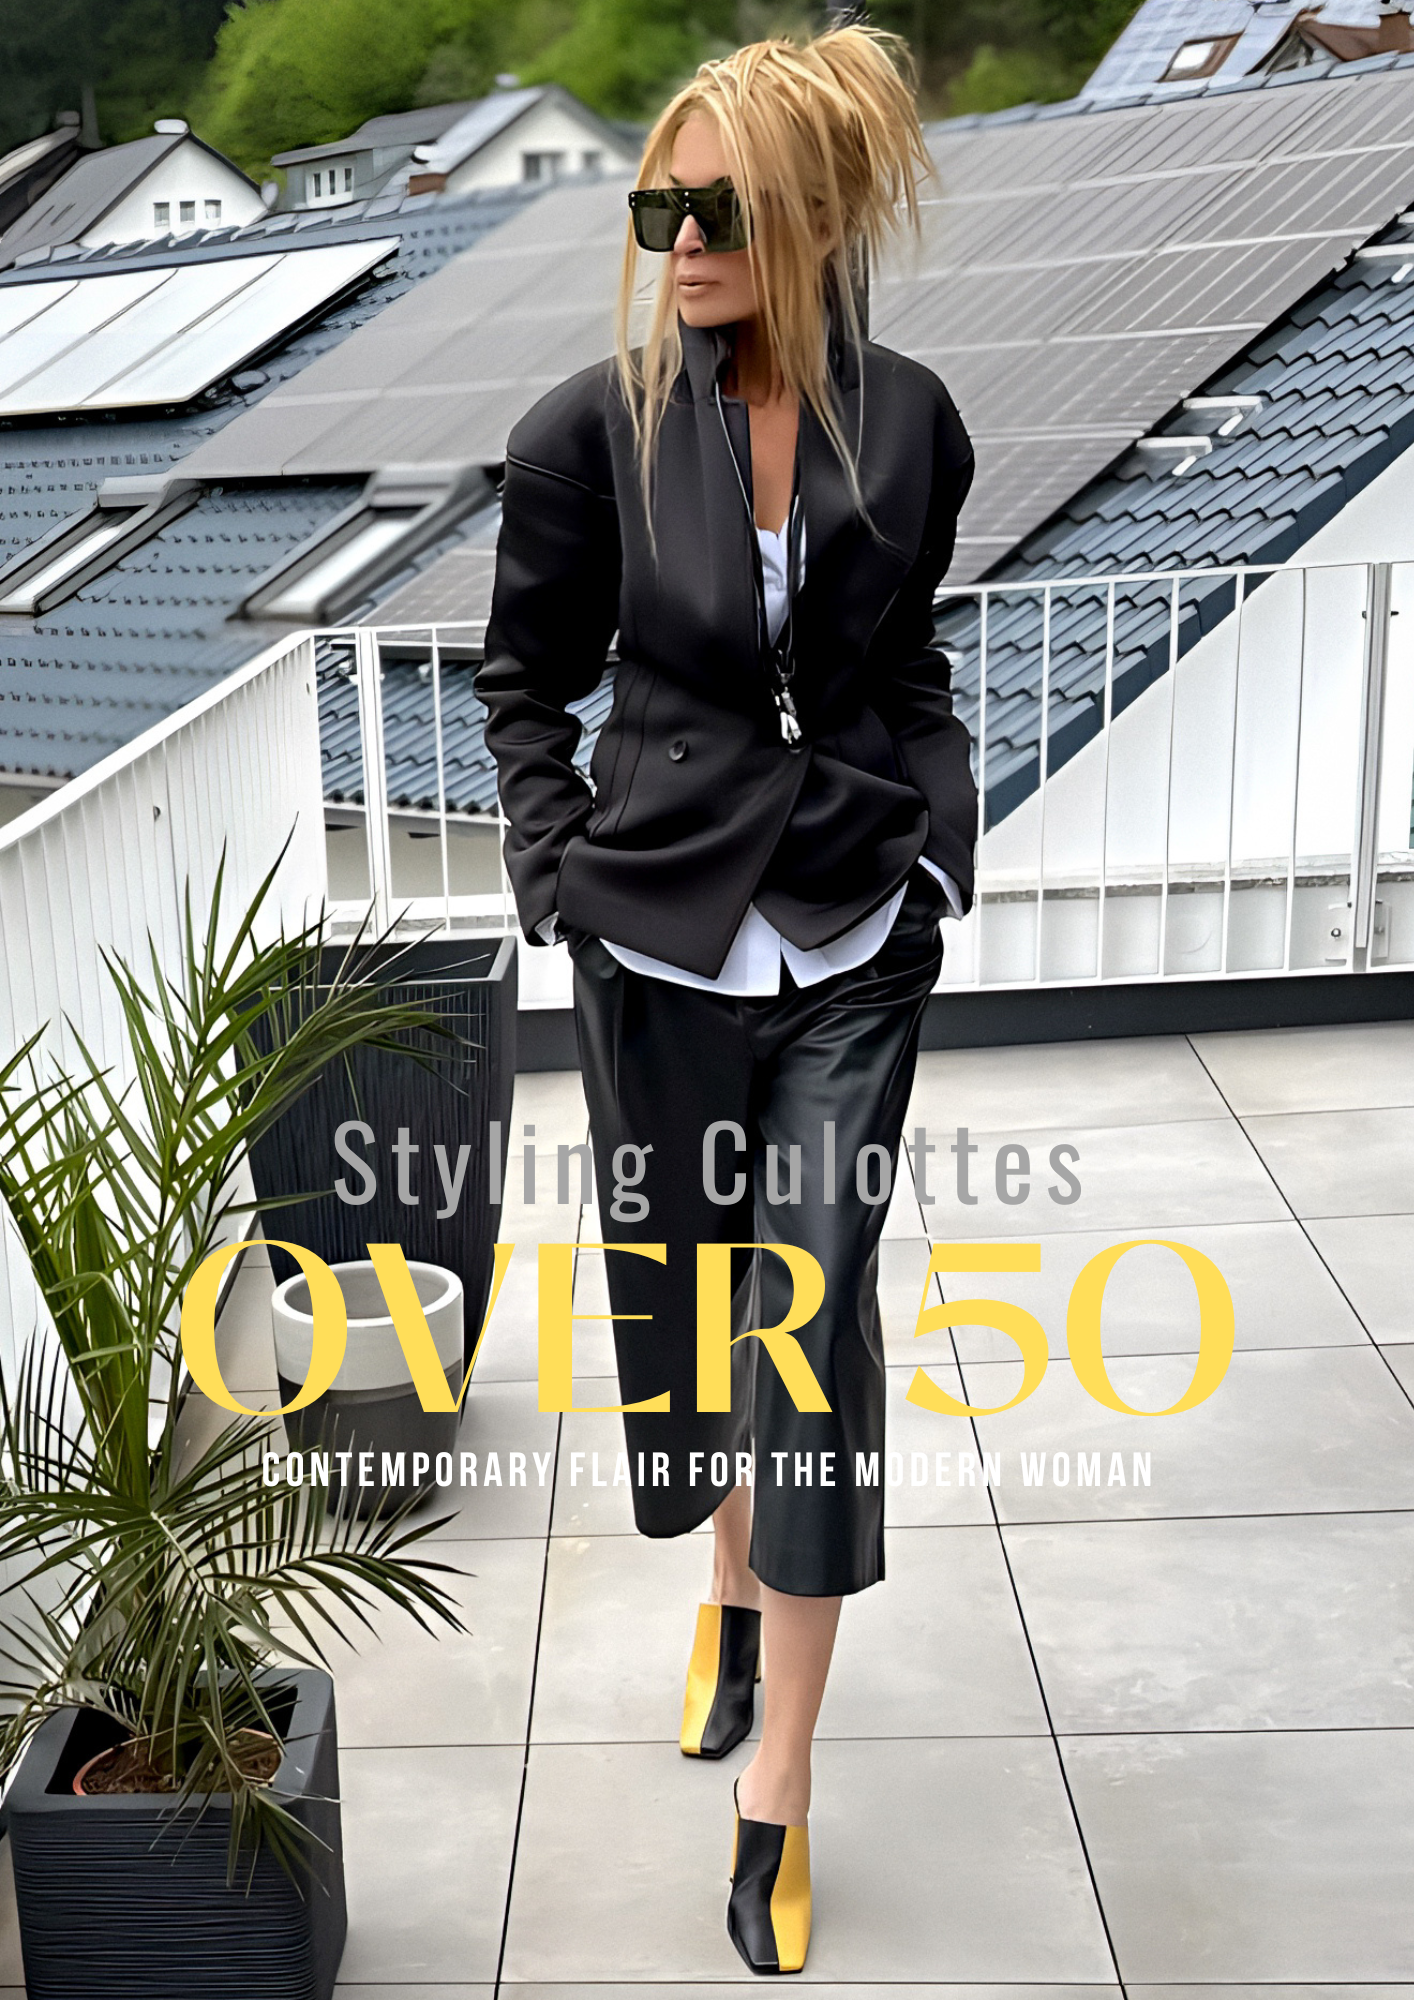 Styling Culottes Over 50: Unlocking Style Secrets